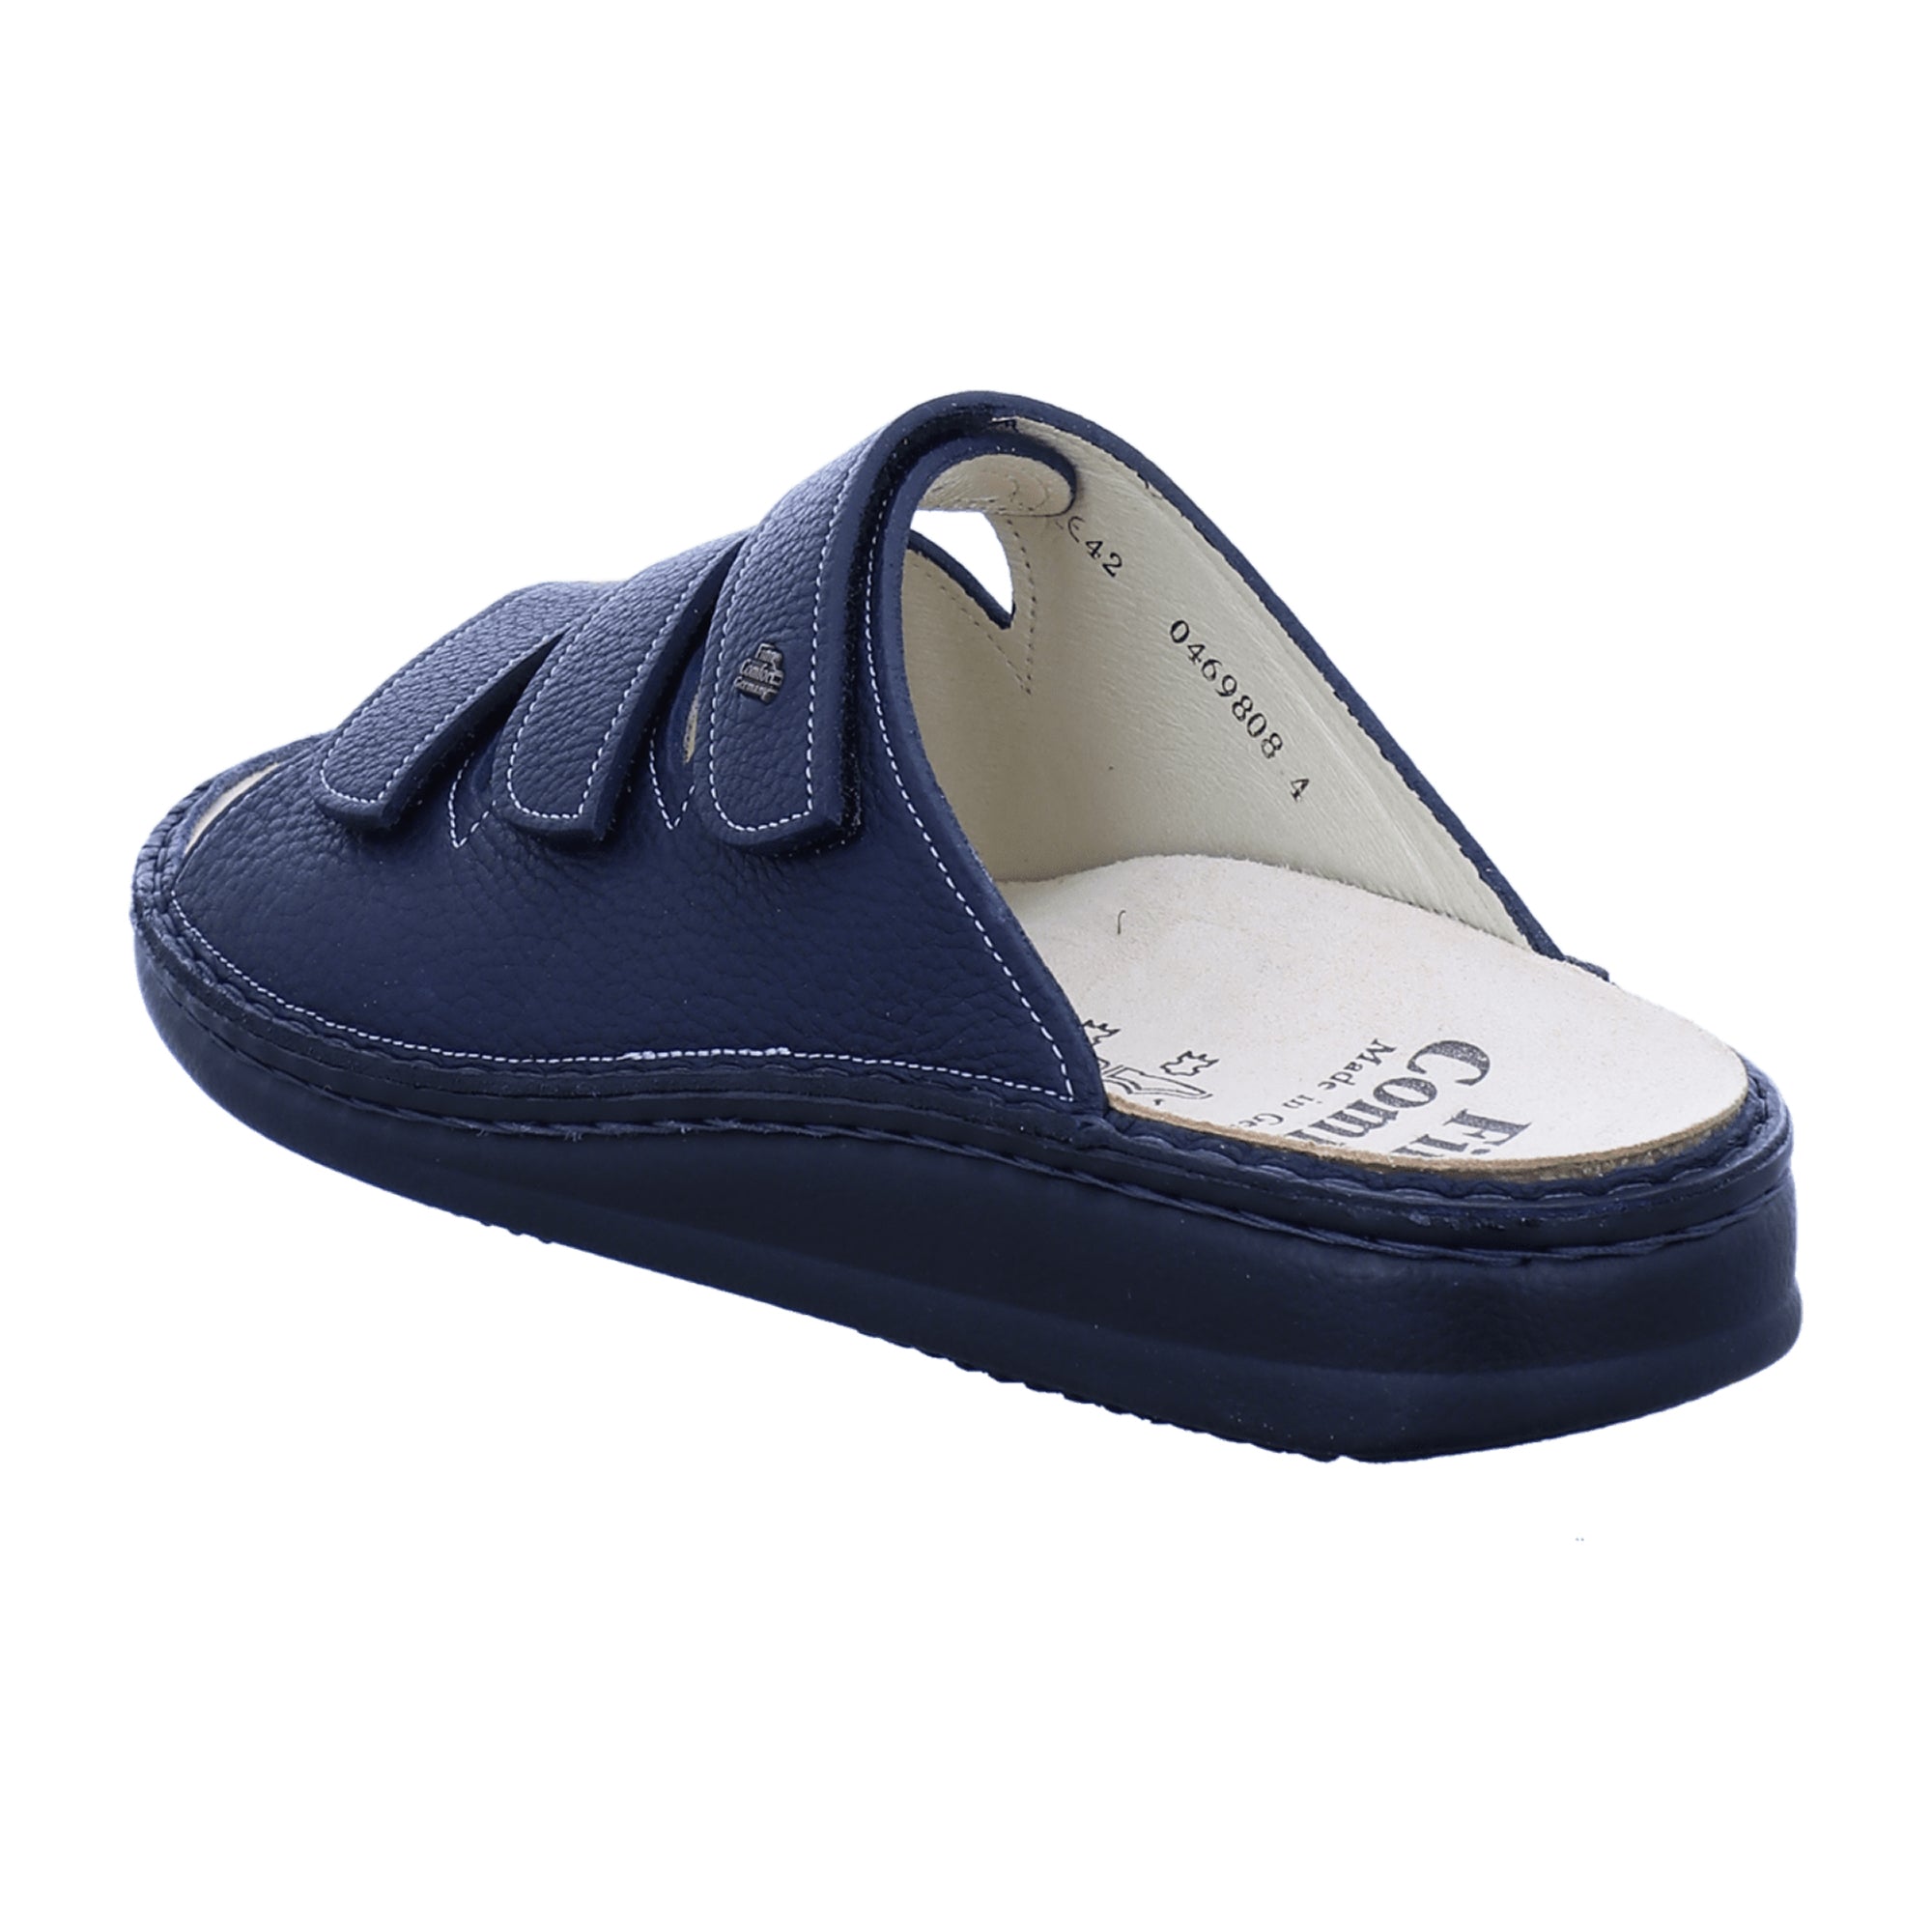 Finn Comfort Korfu Men's Sandals - Stylish & Durable in Blue